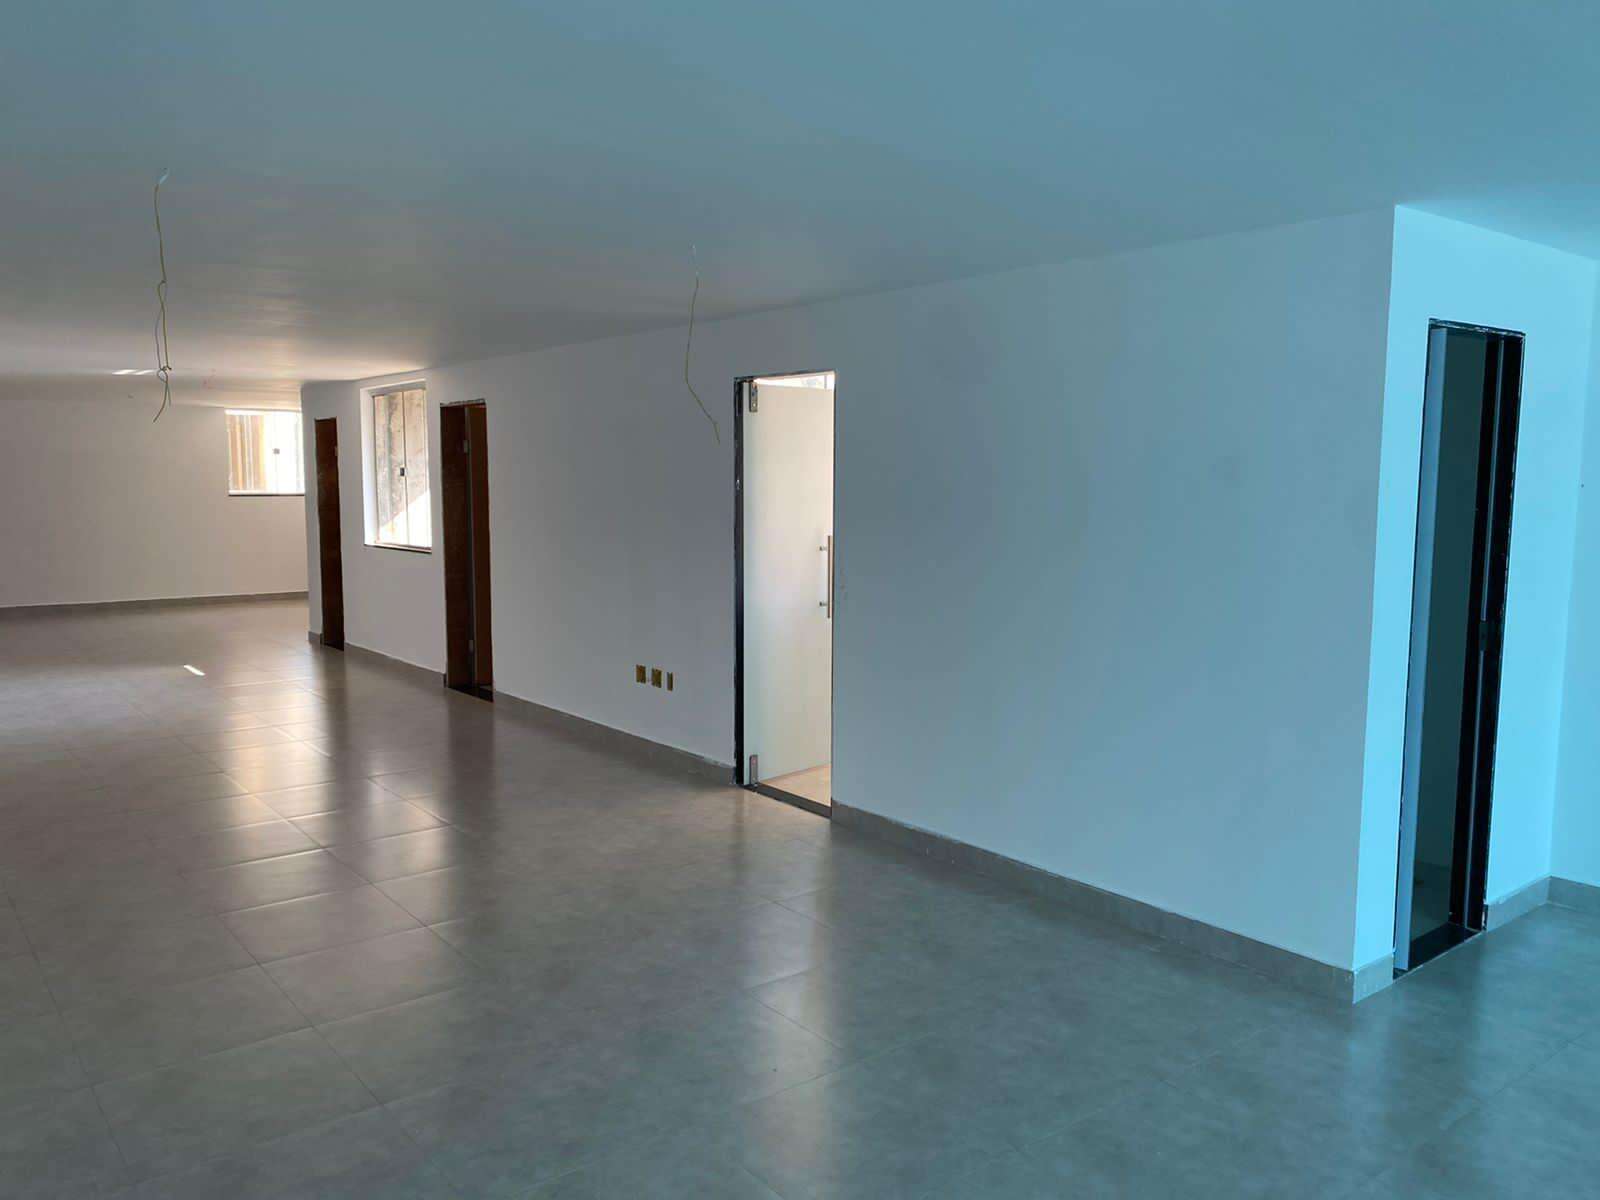 Sala para aluguel no Centro: da05d931-d-whatsapp-image-2021-09-29-at-15.52.09.jpeg